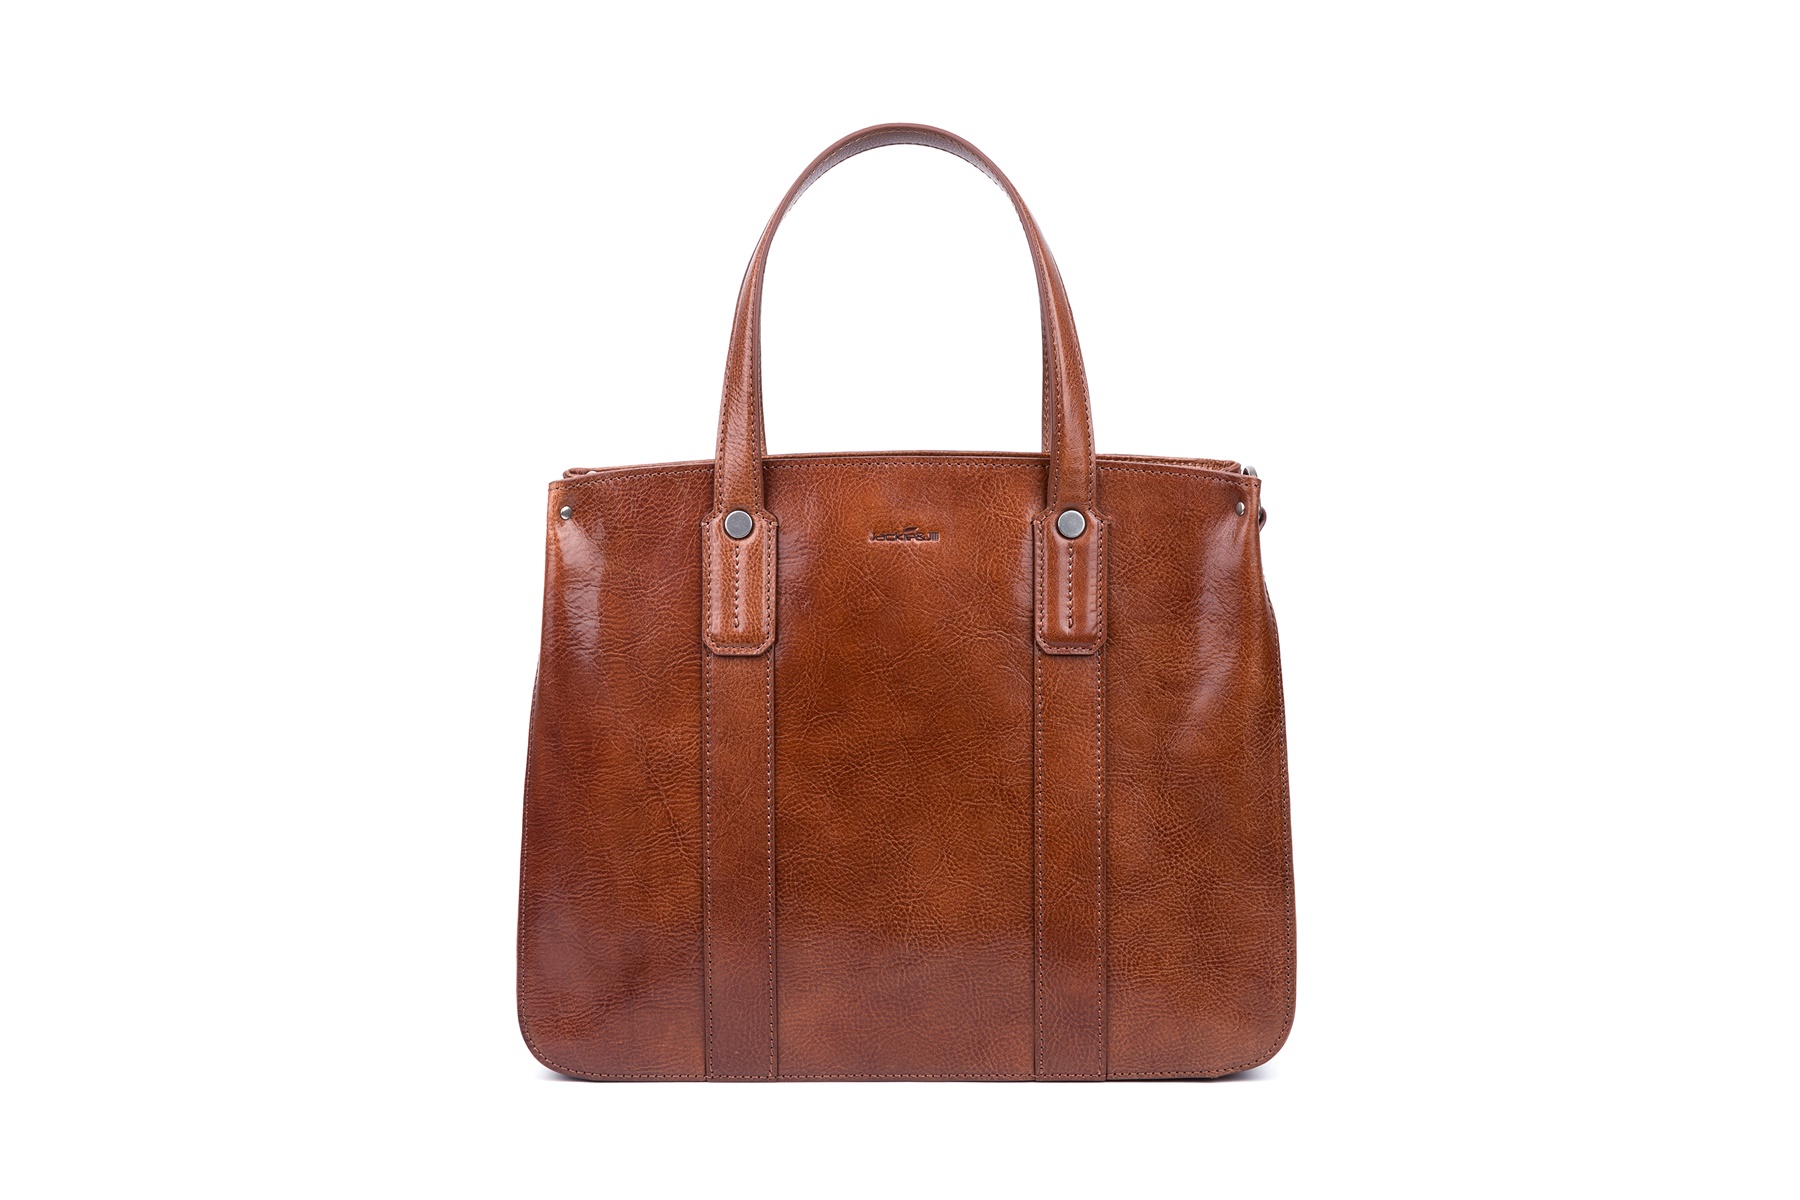 Handbag top handle waxed leather zipper close bag